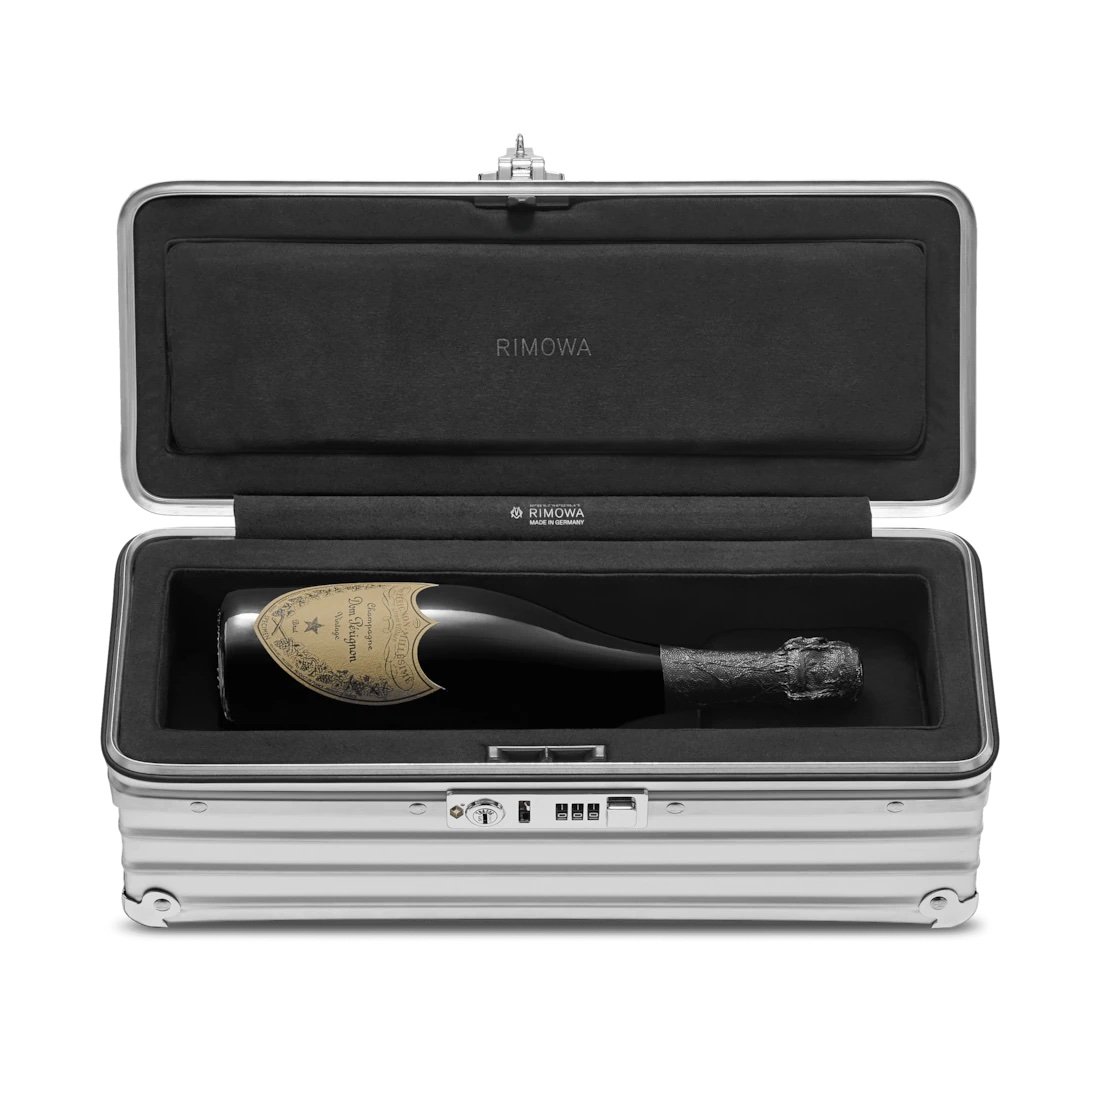 Rimowa’s $1,720 Champagne Suitcase